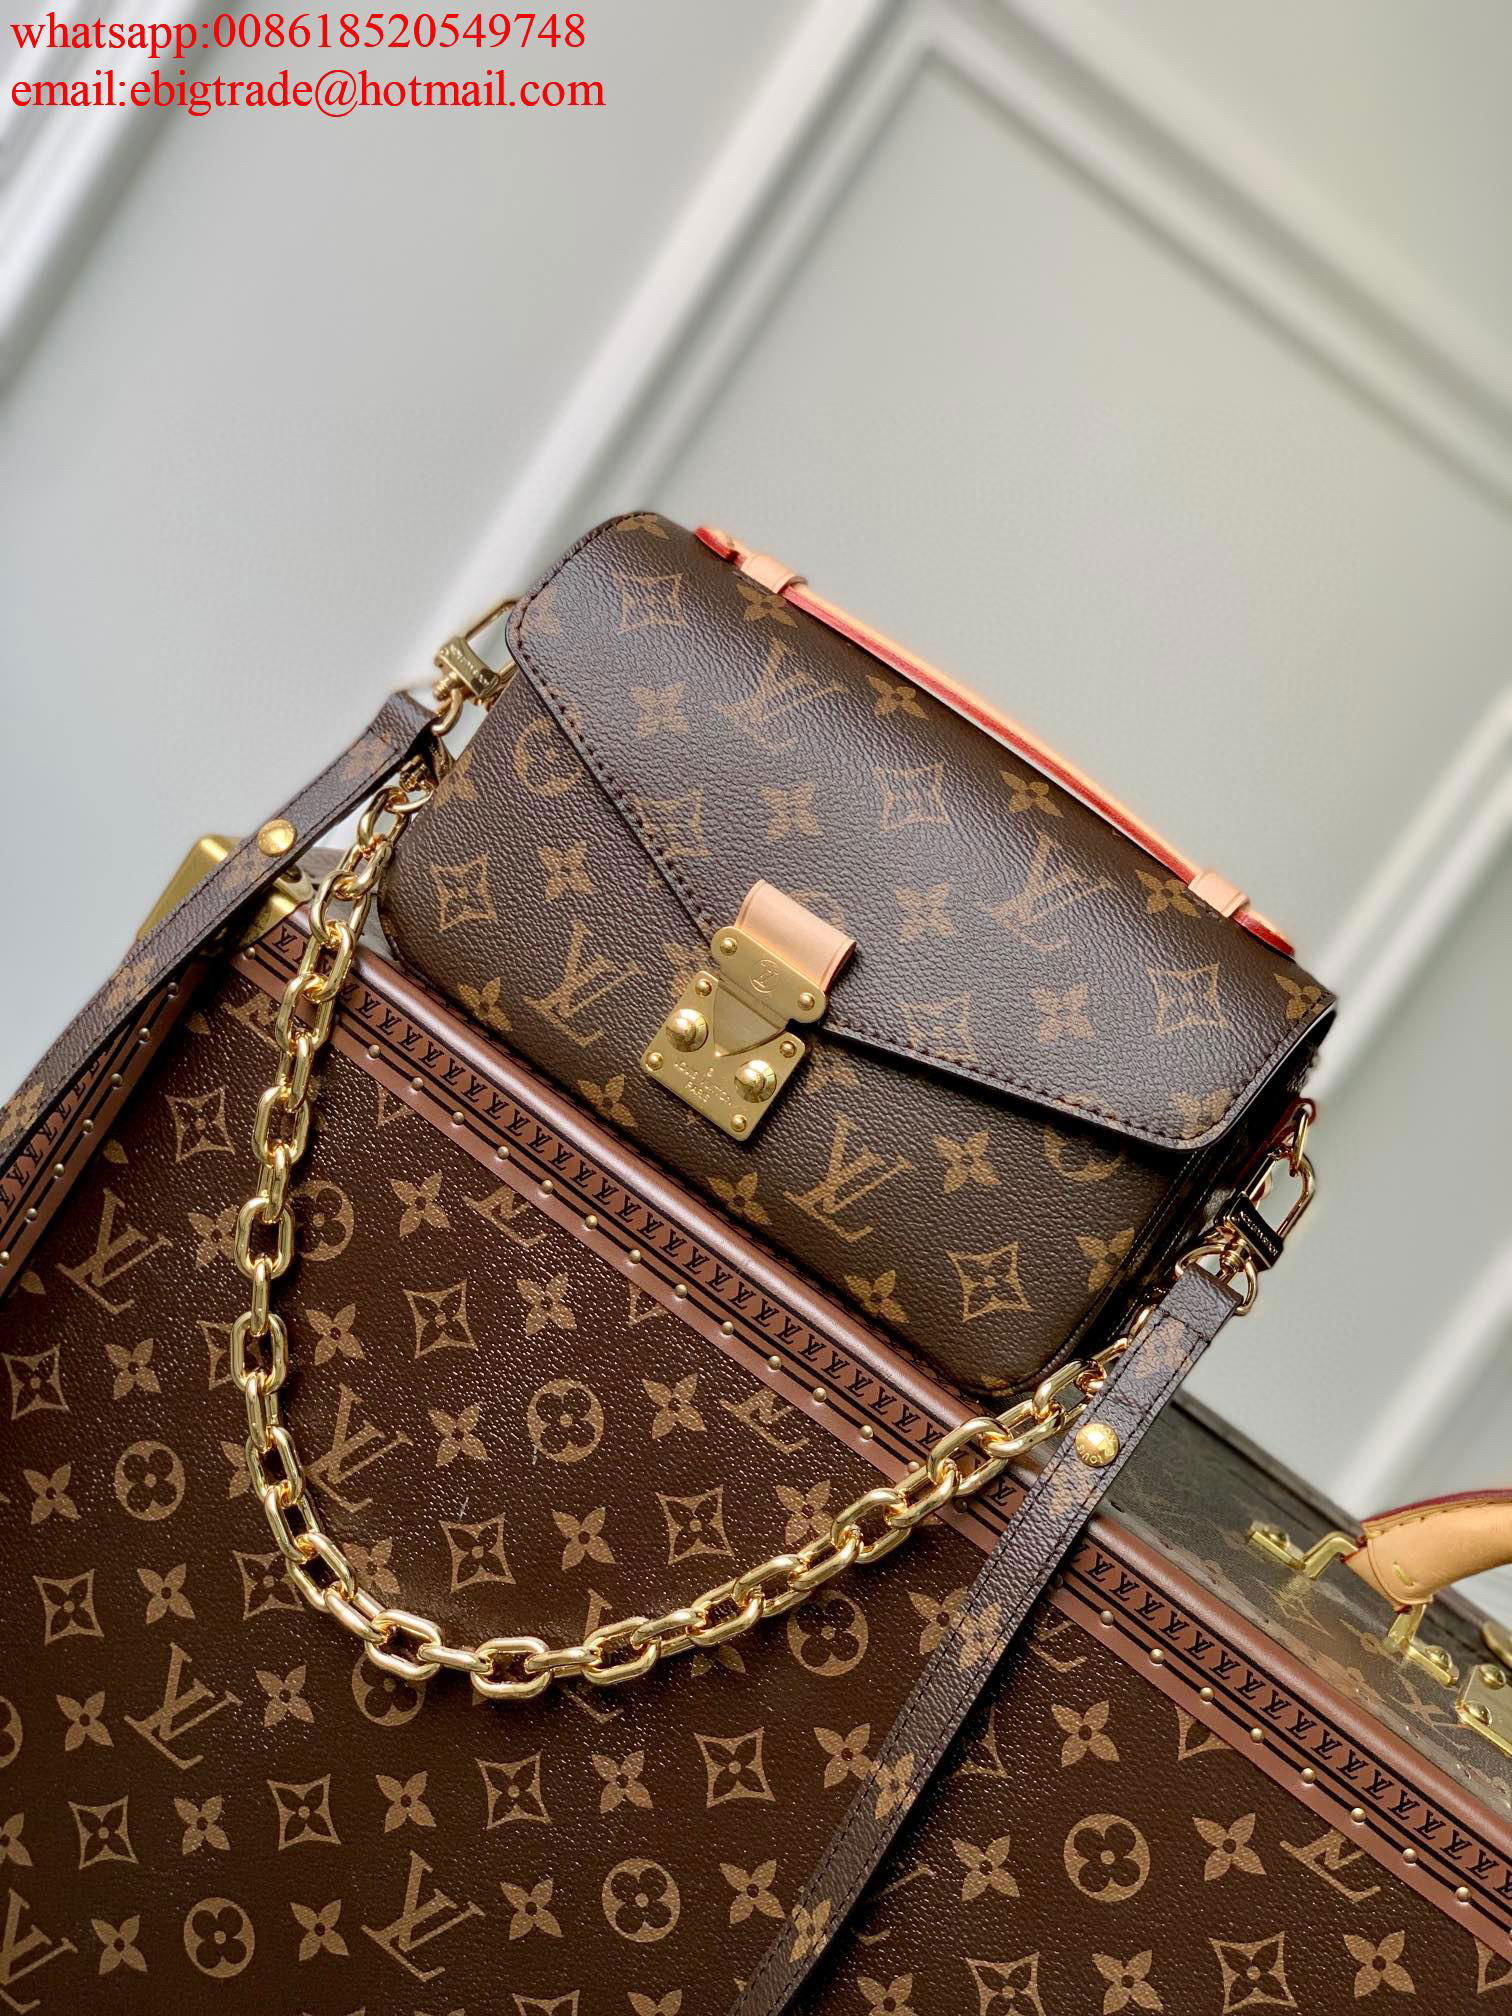 wholesaler Louis Vuitton handbags